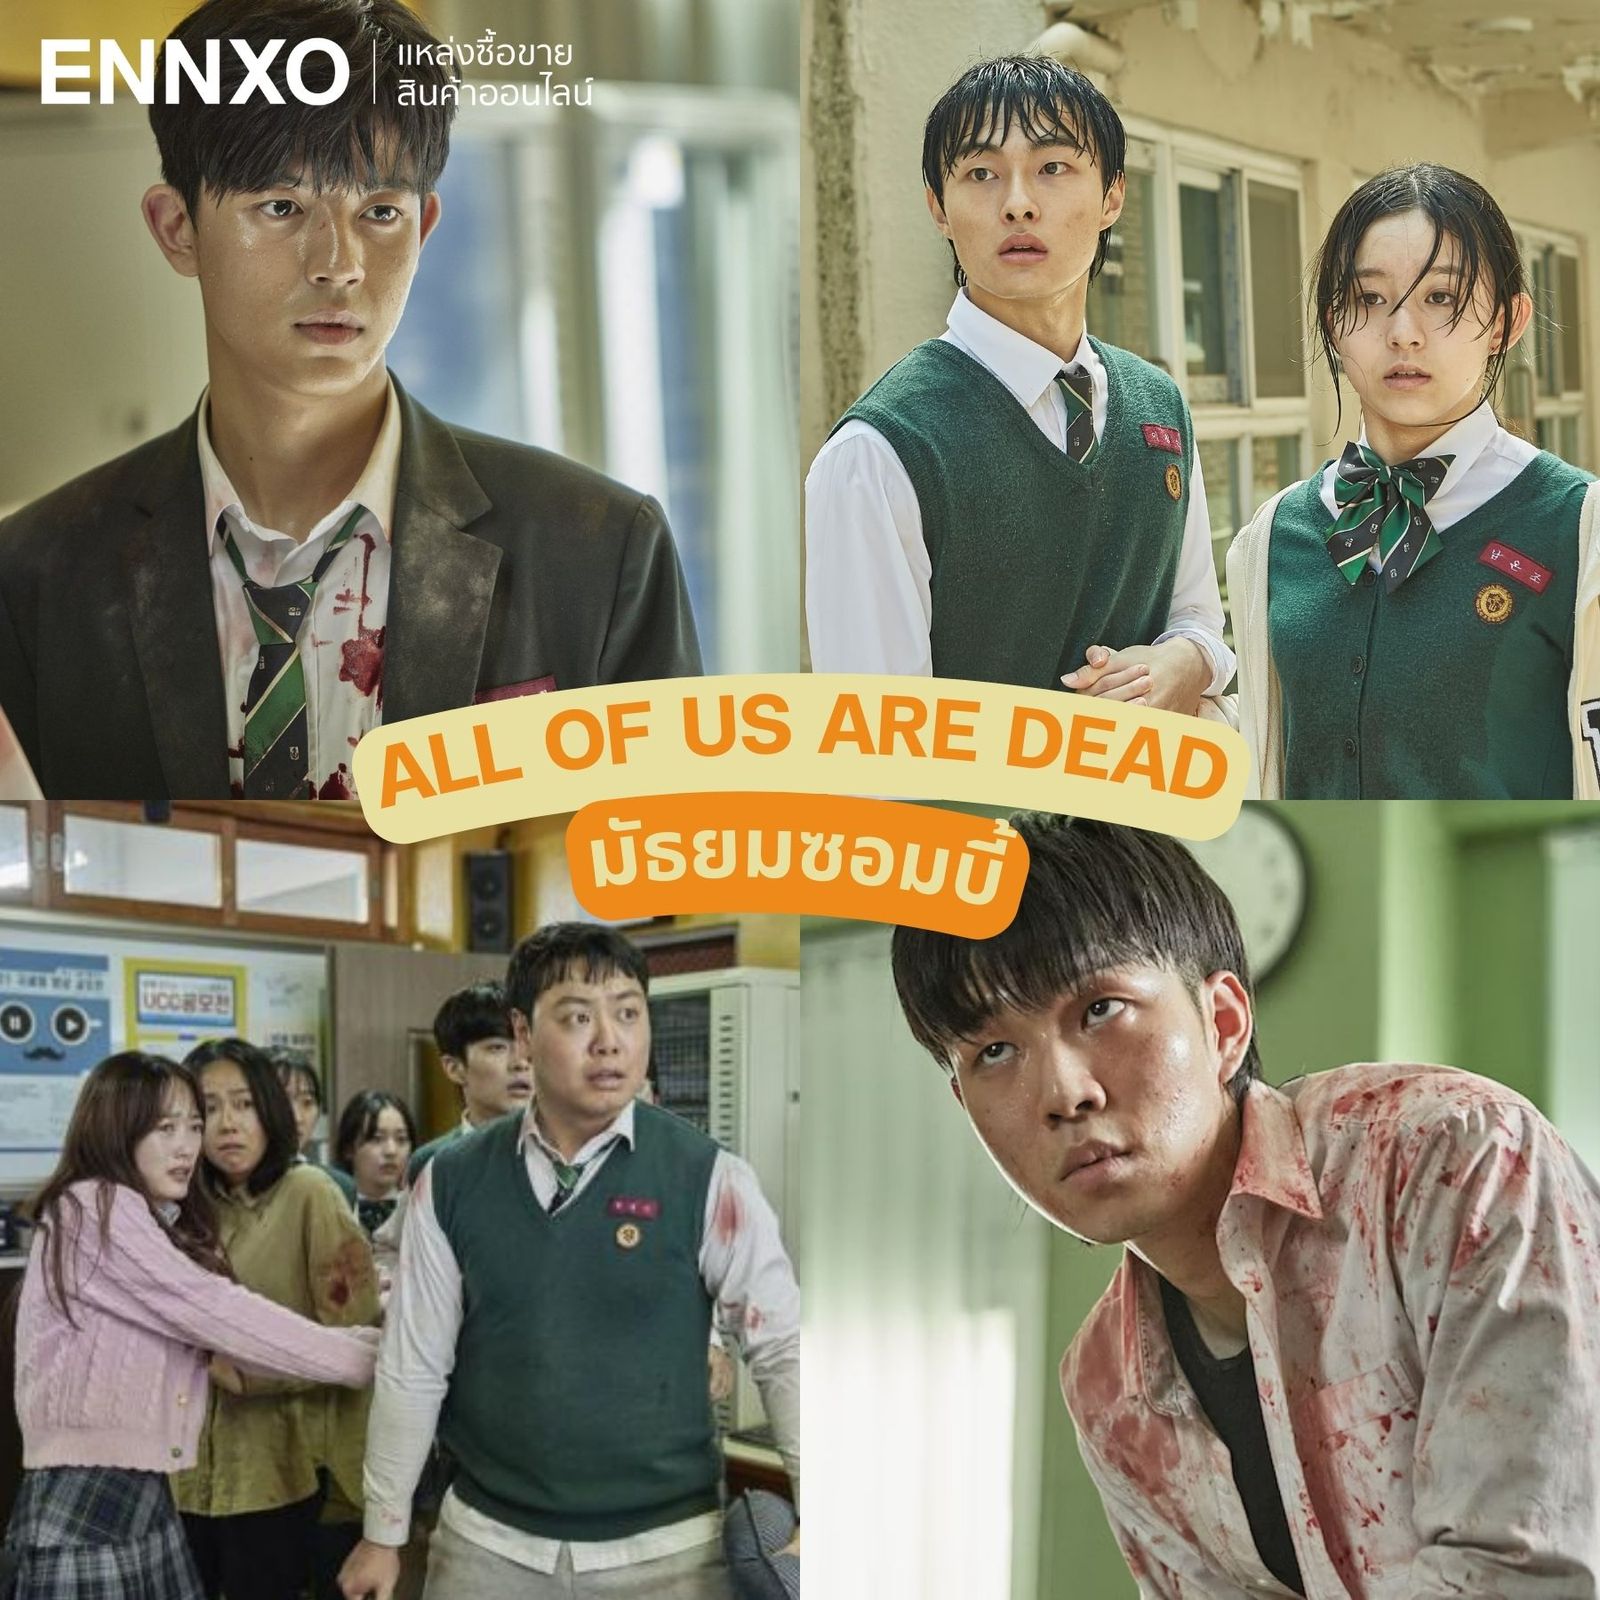 All of Us Are Dead ซีรีส์เกาหลีนักเรียนมัธยม